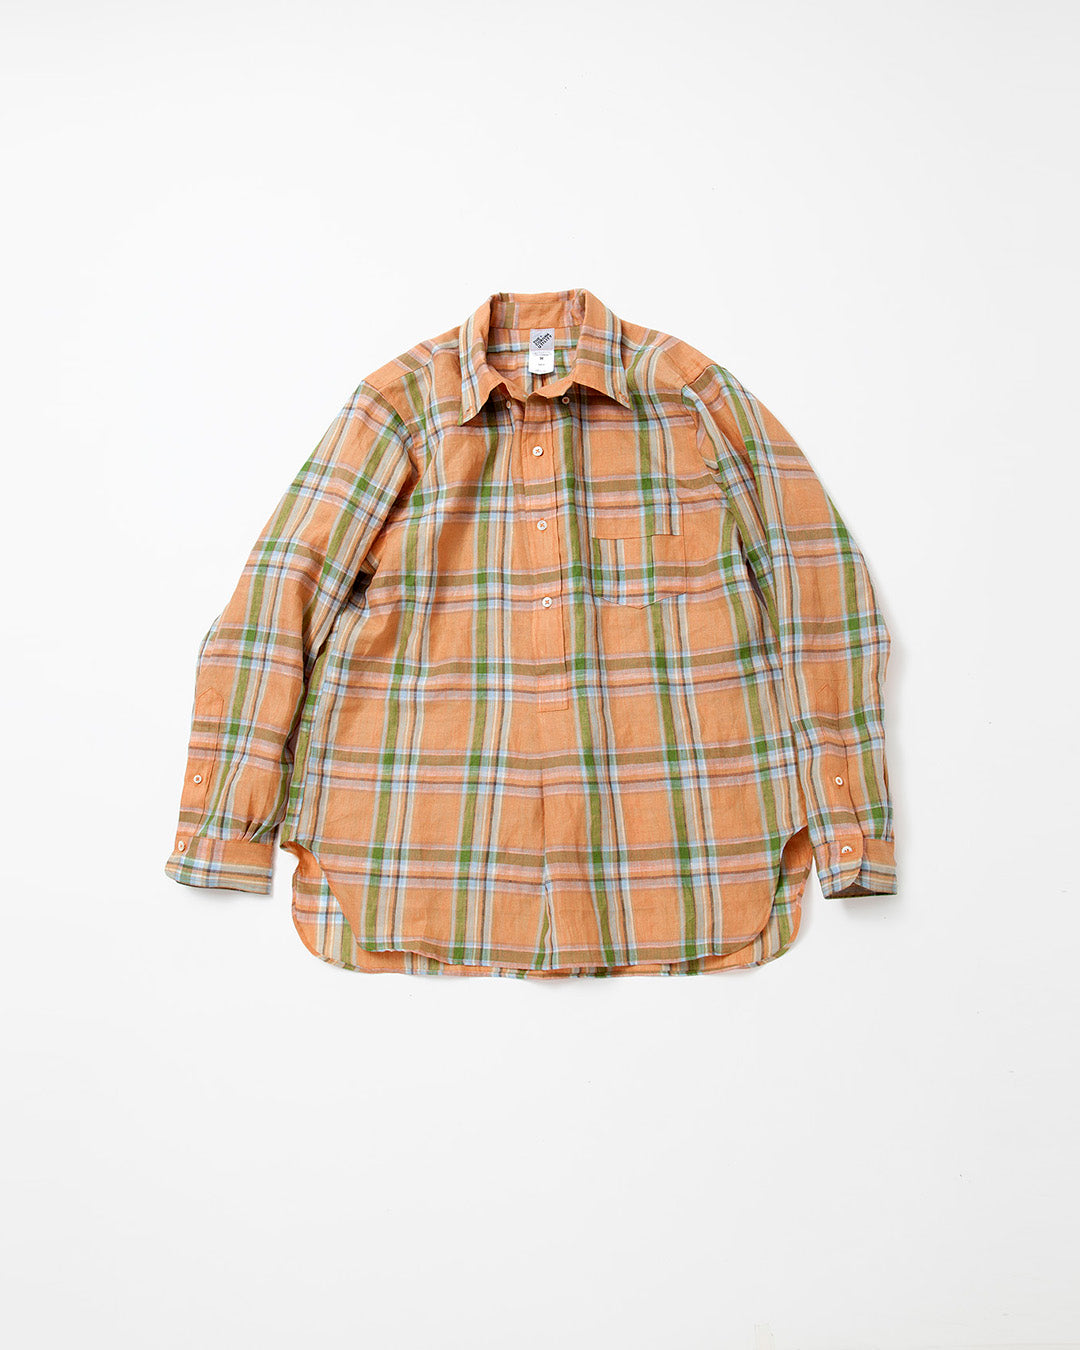 THE CORONA UTILITY - CS005・White Collar Pullover Work Shirt / Orange × Green